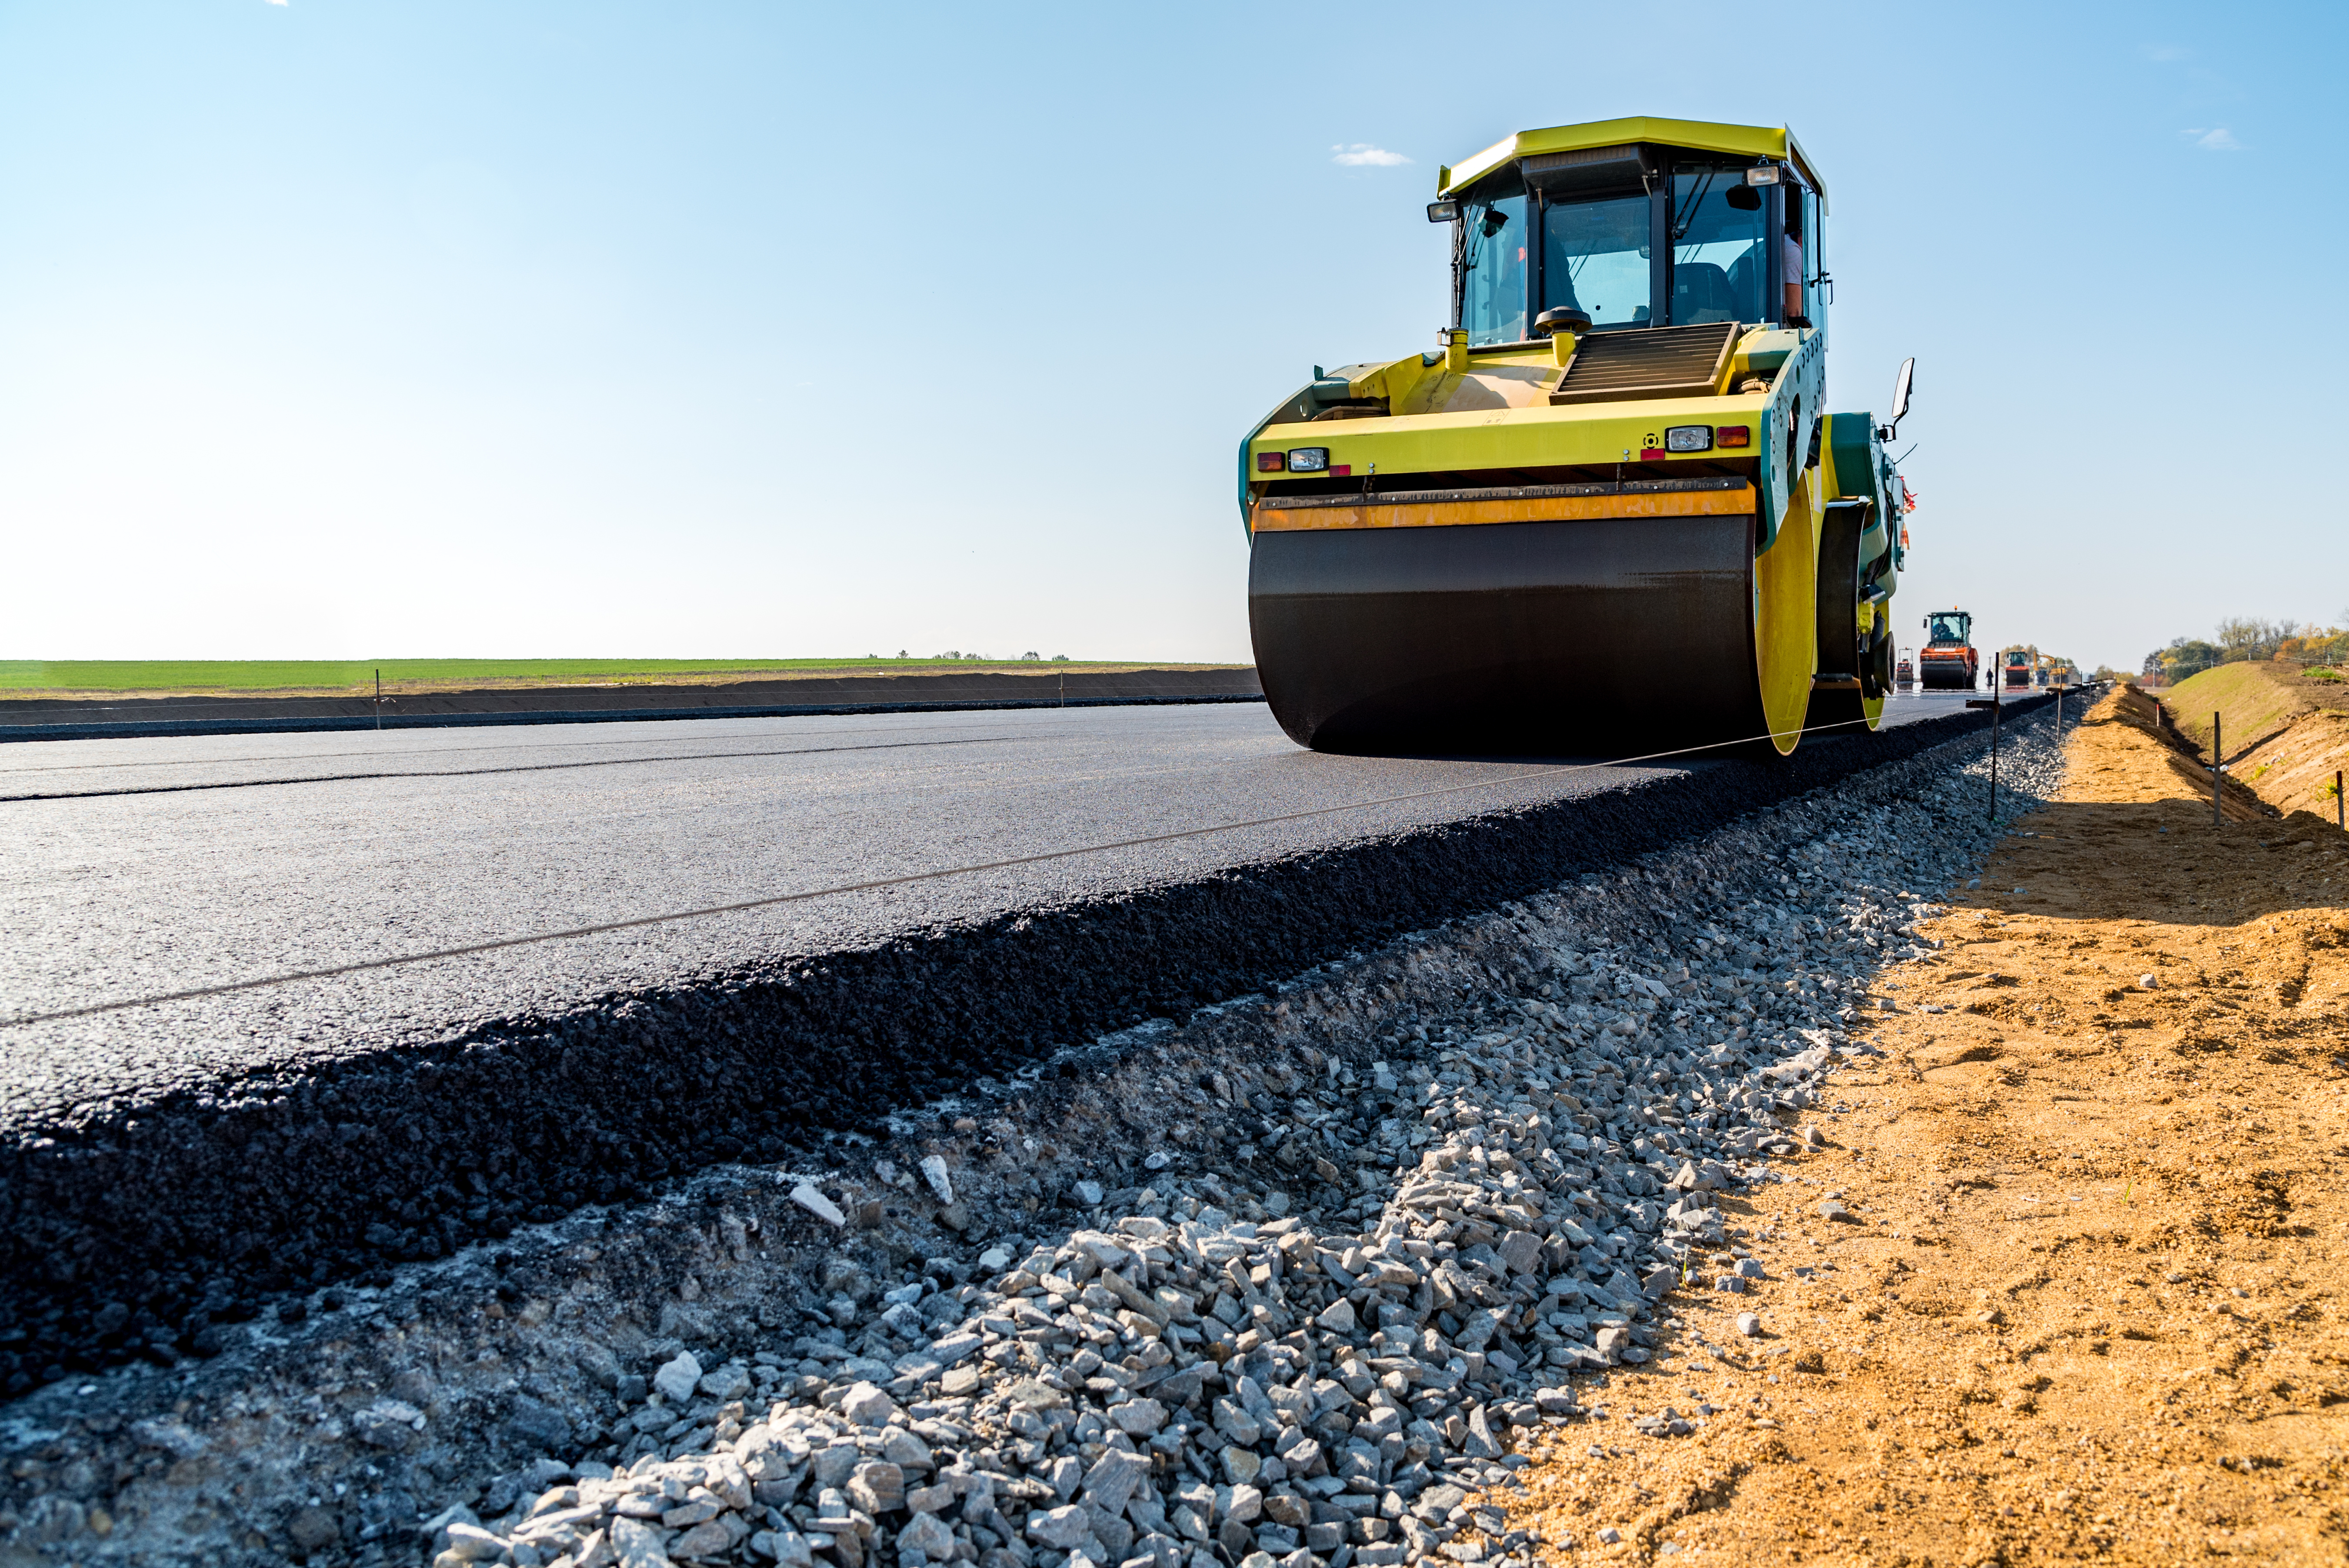 Road rollers building the new asphalt road